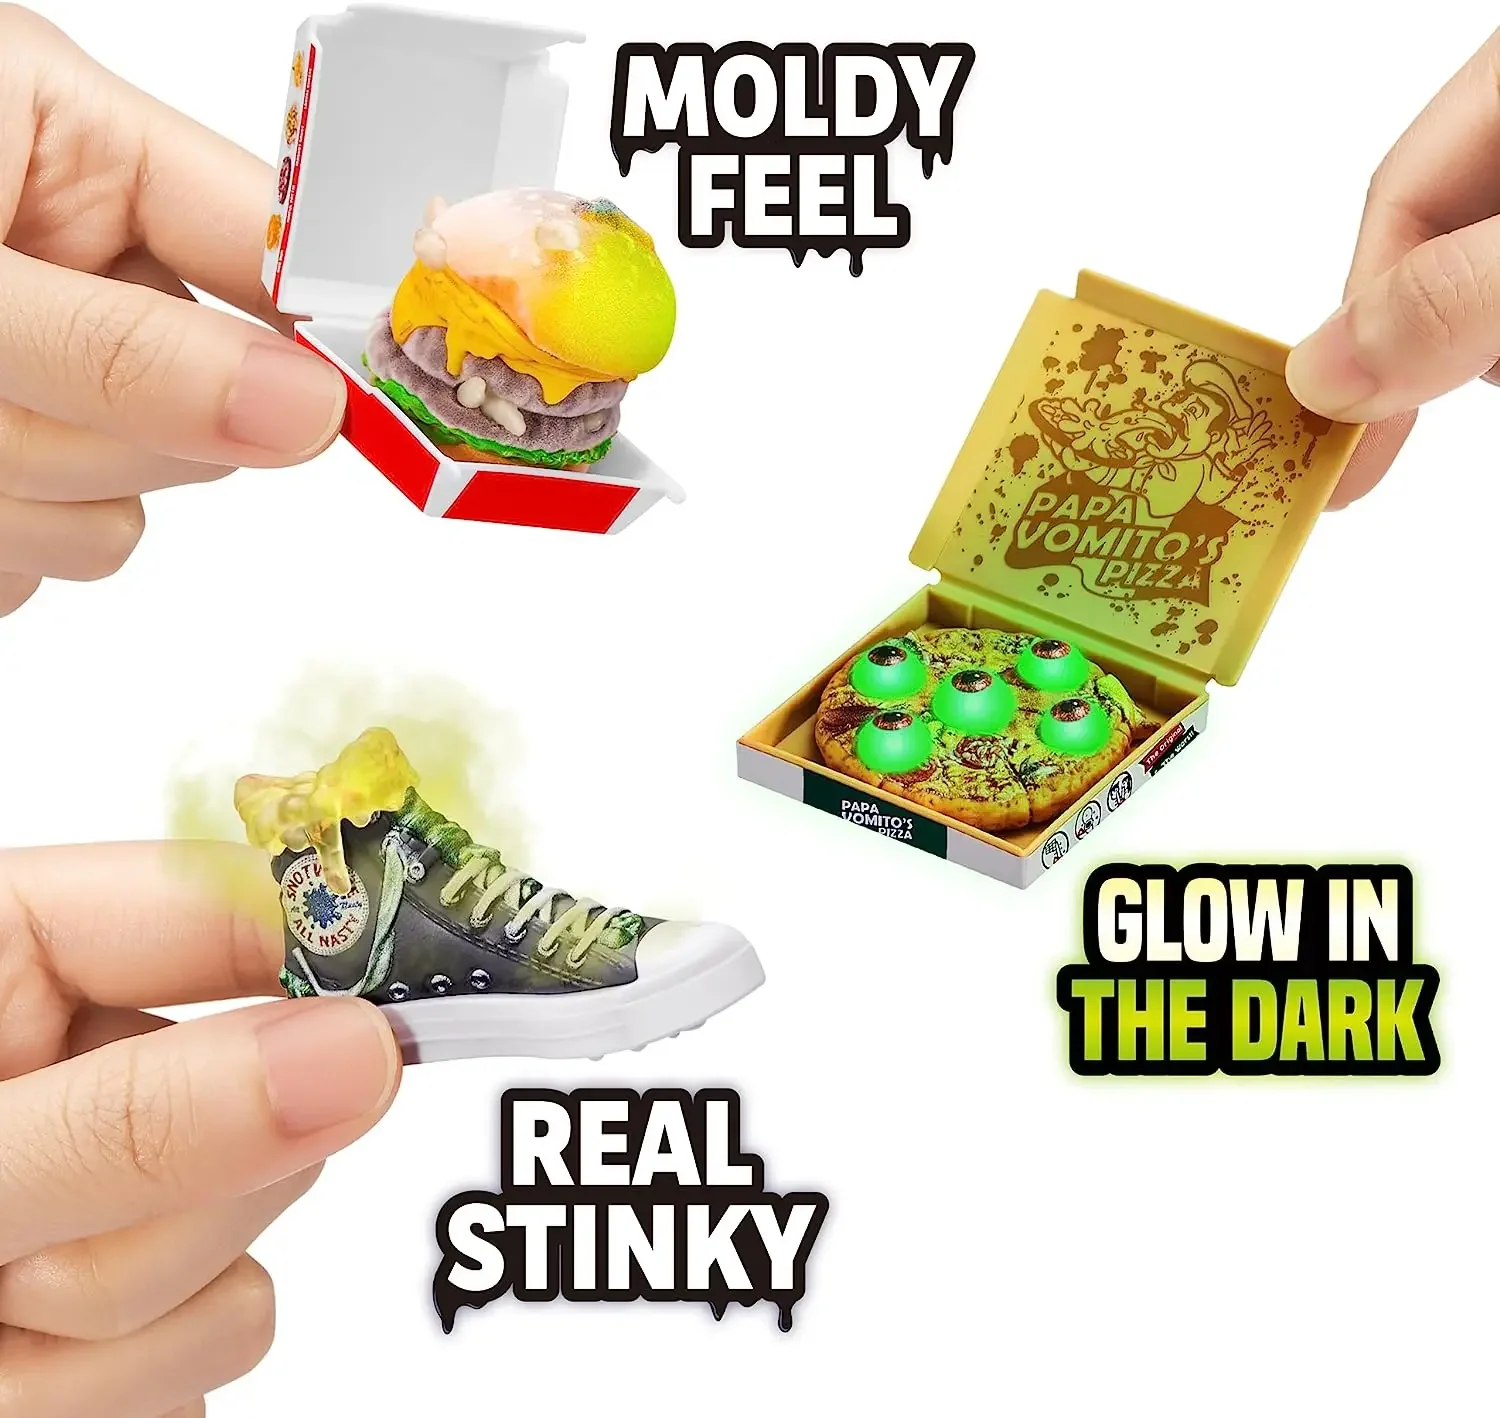 5 Surprise Mega Gross Minis 1 RANDOM Toxic Glow Sticker Mega Gross Mini Toy  (No Packaging) 